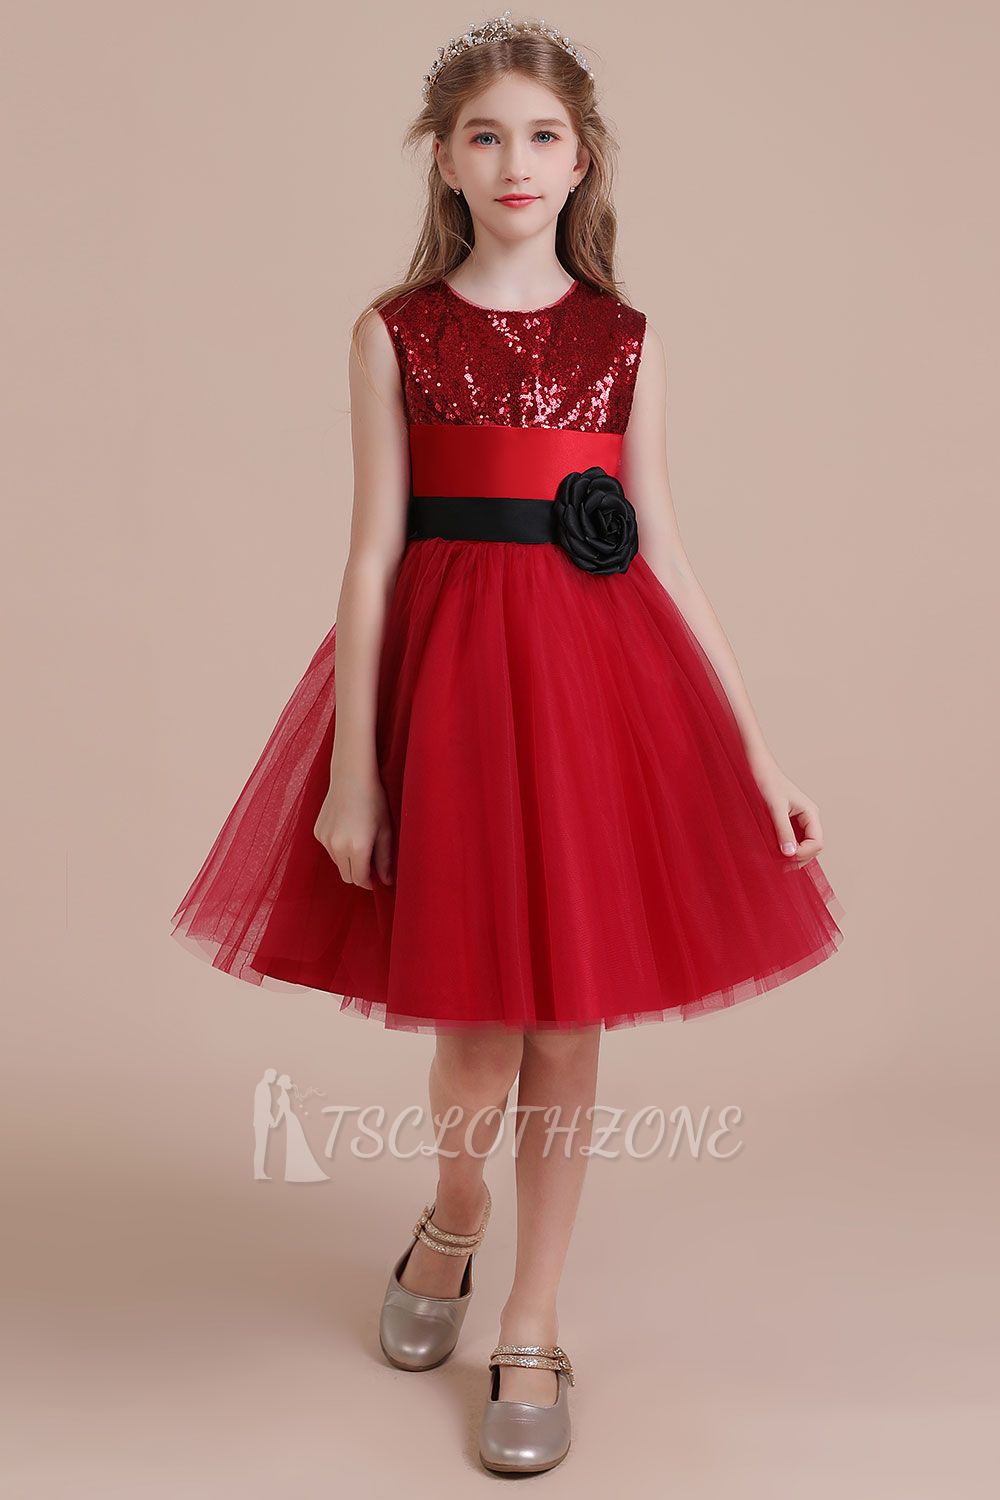 Fabulous Tulle A-line Flower Girl Dress |Graceful Sequins  Little Girls Dress for Wedding